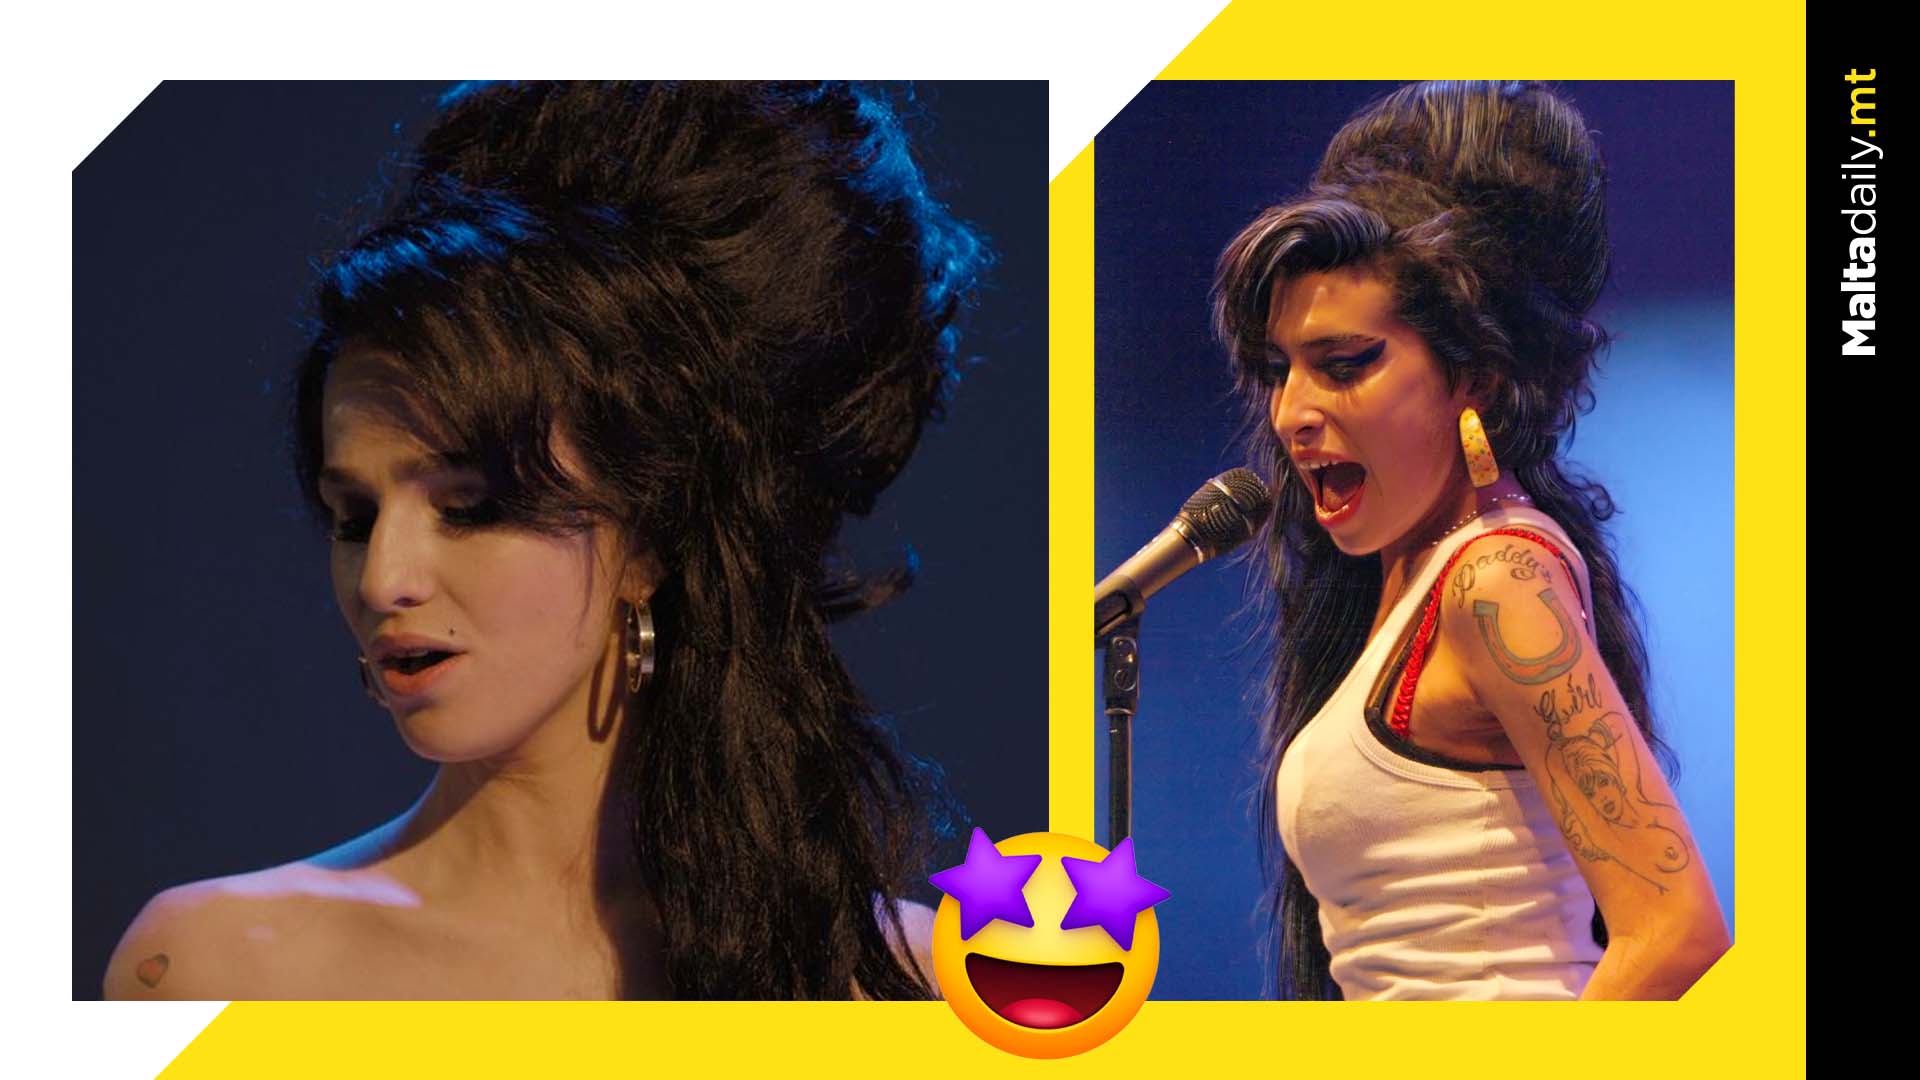 Marisa Abela stars as Amy Winehouse in new biopic